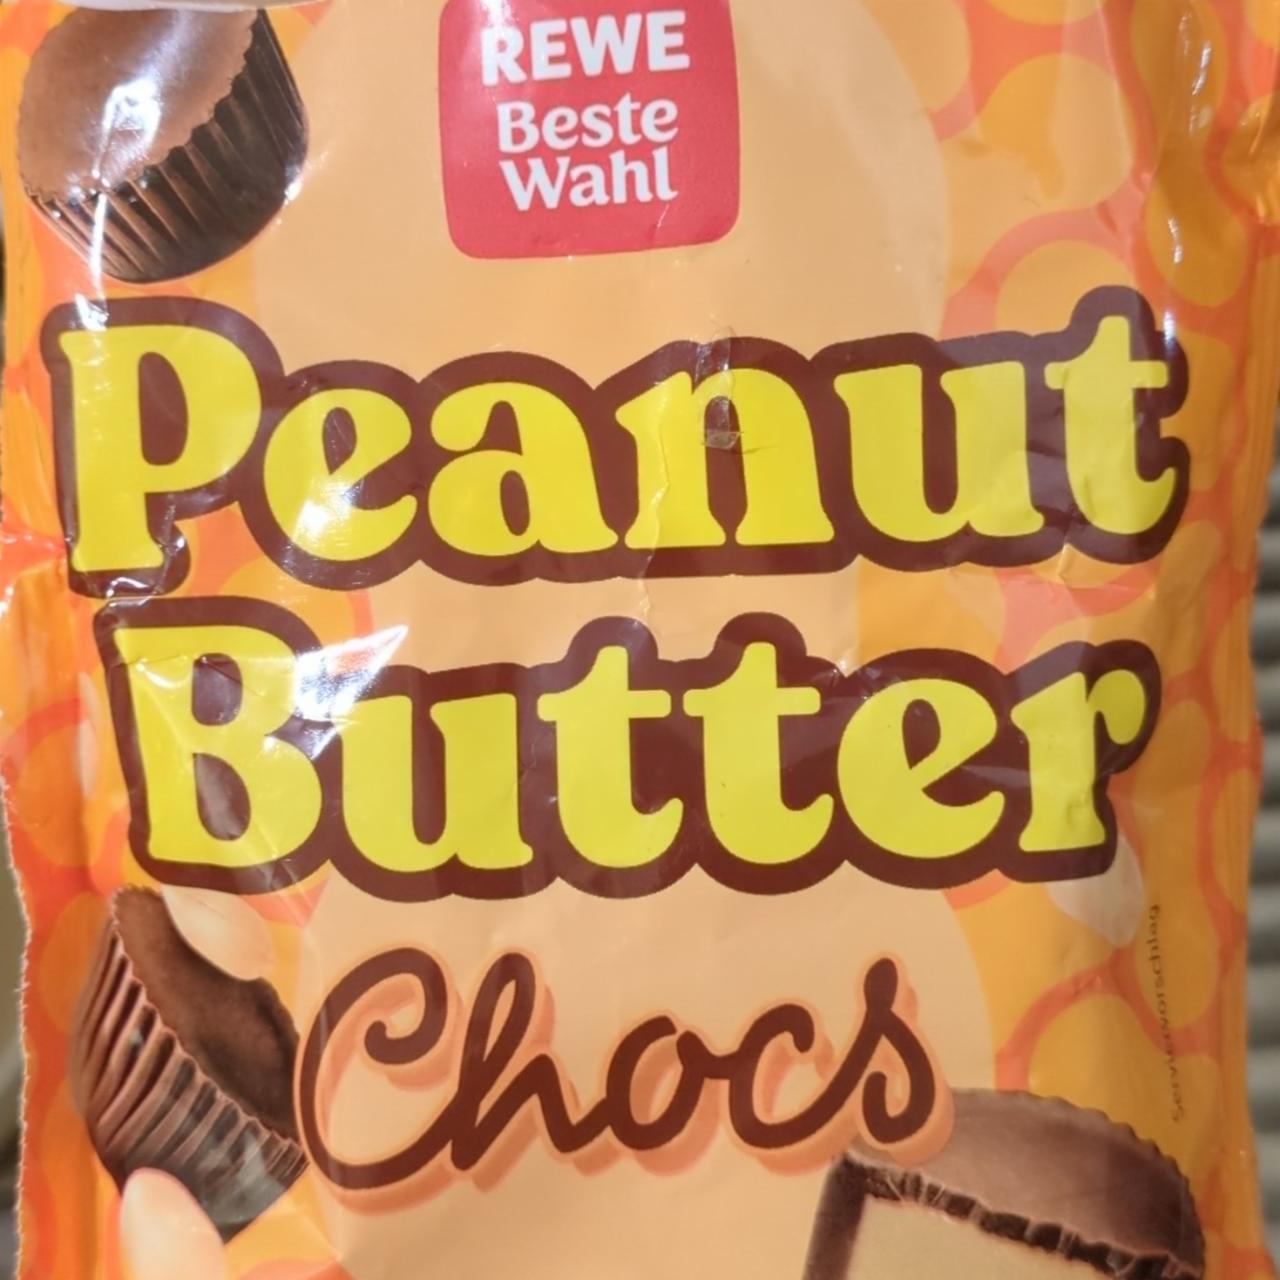 Fotografie - Peanut Butter Chocs Rewe beste wahl